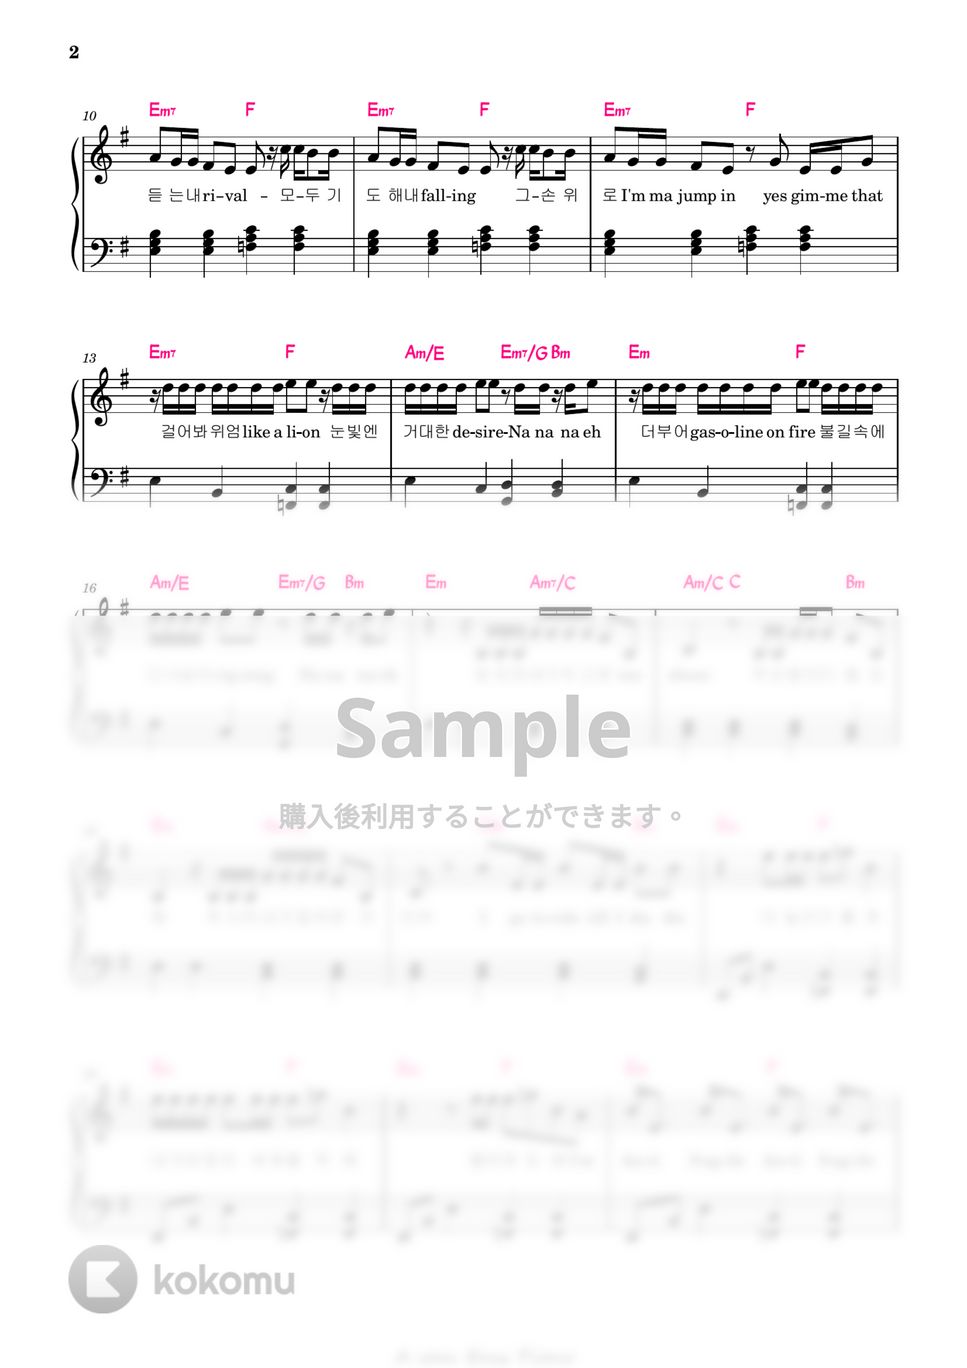 LE SSERAFIM(ル・セラフィム) - ANTIFRAGILE (ピアノ両手 / 中級 / 歌詞付き) by A-sam